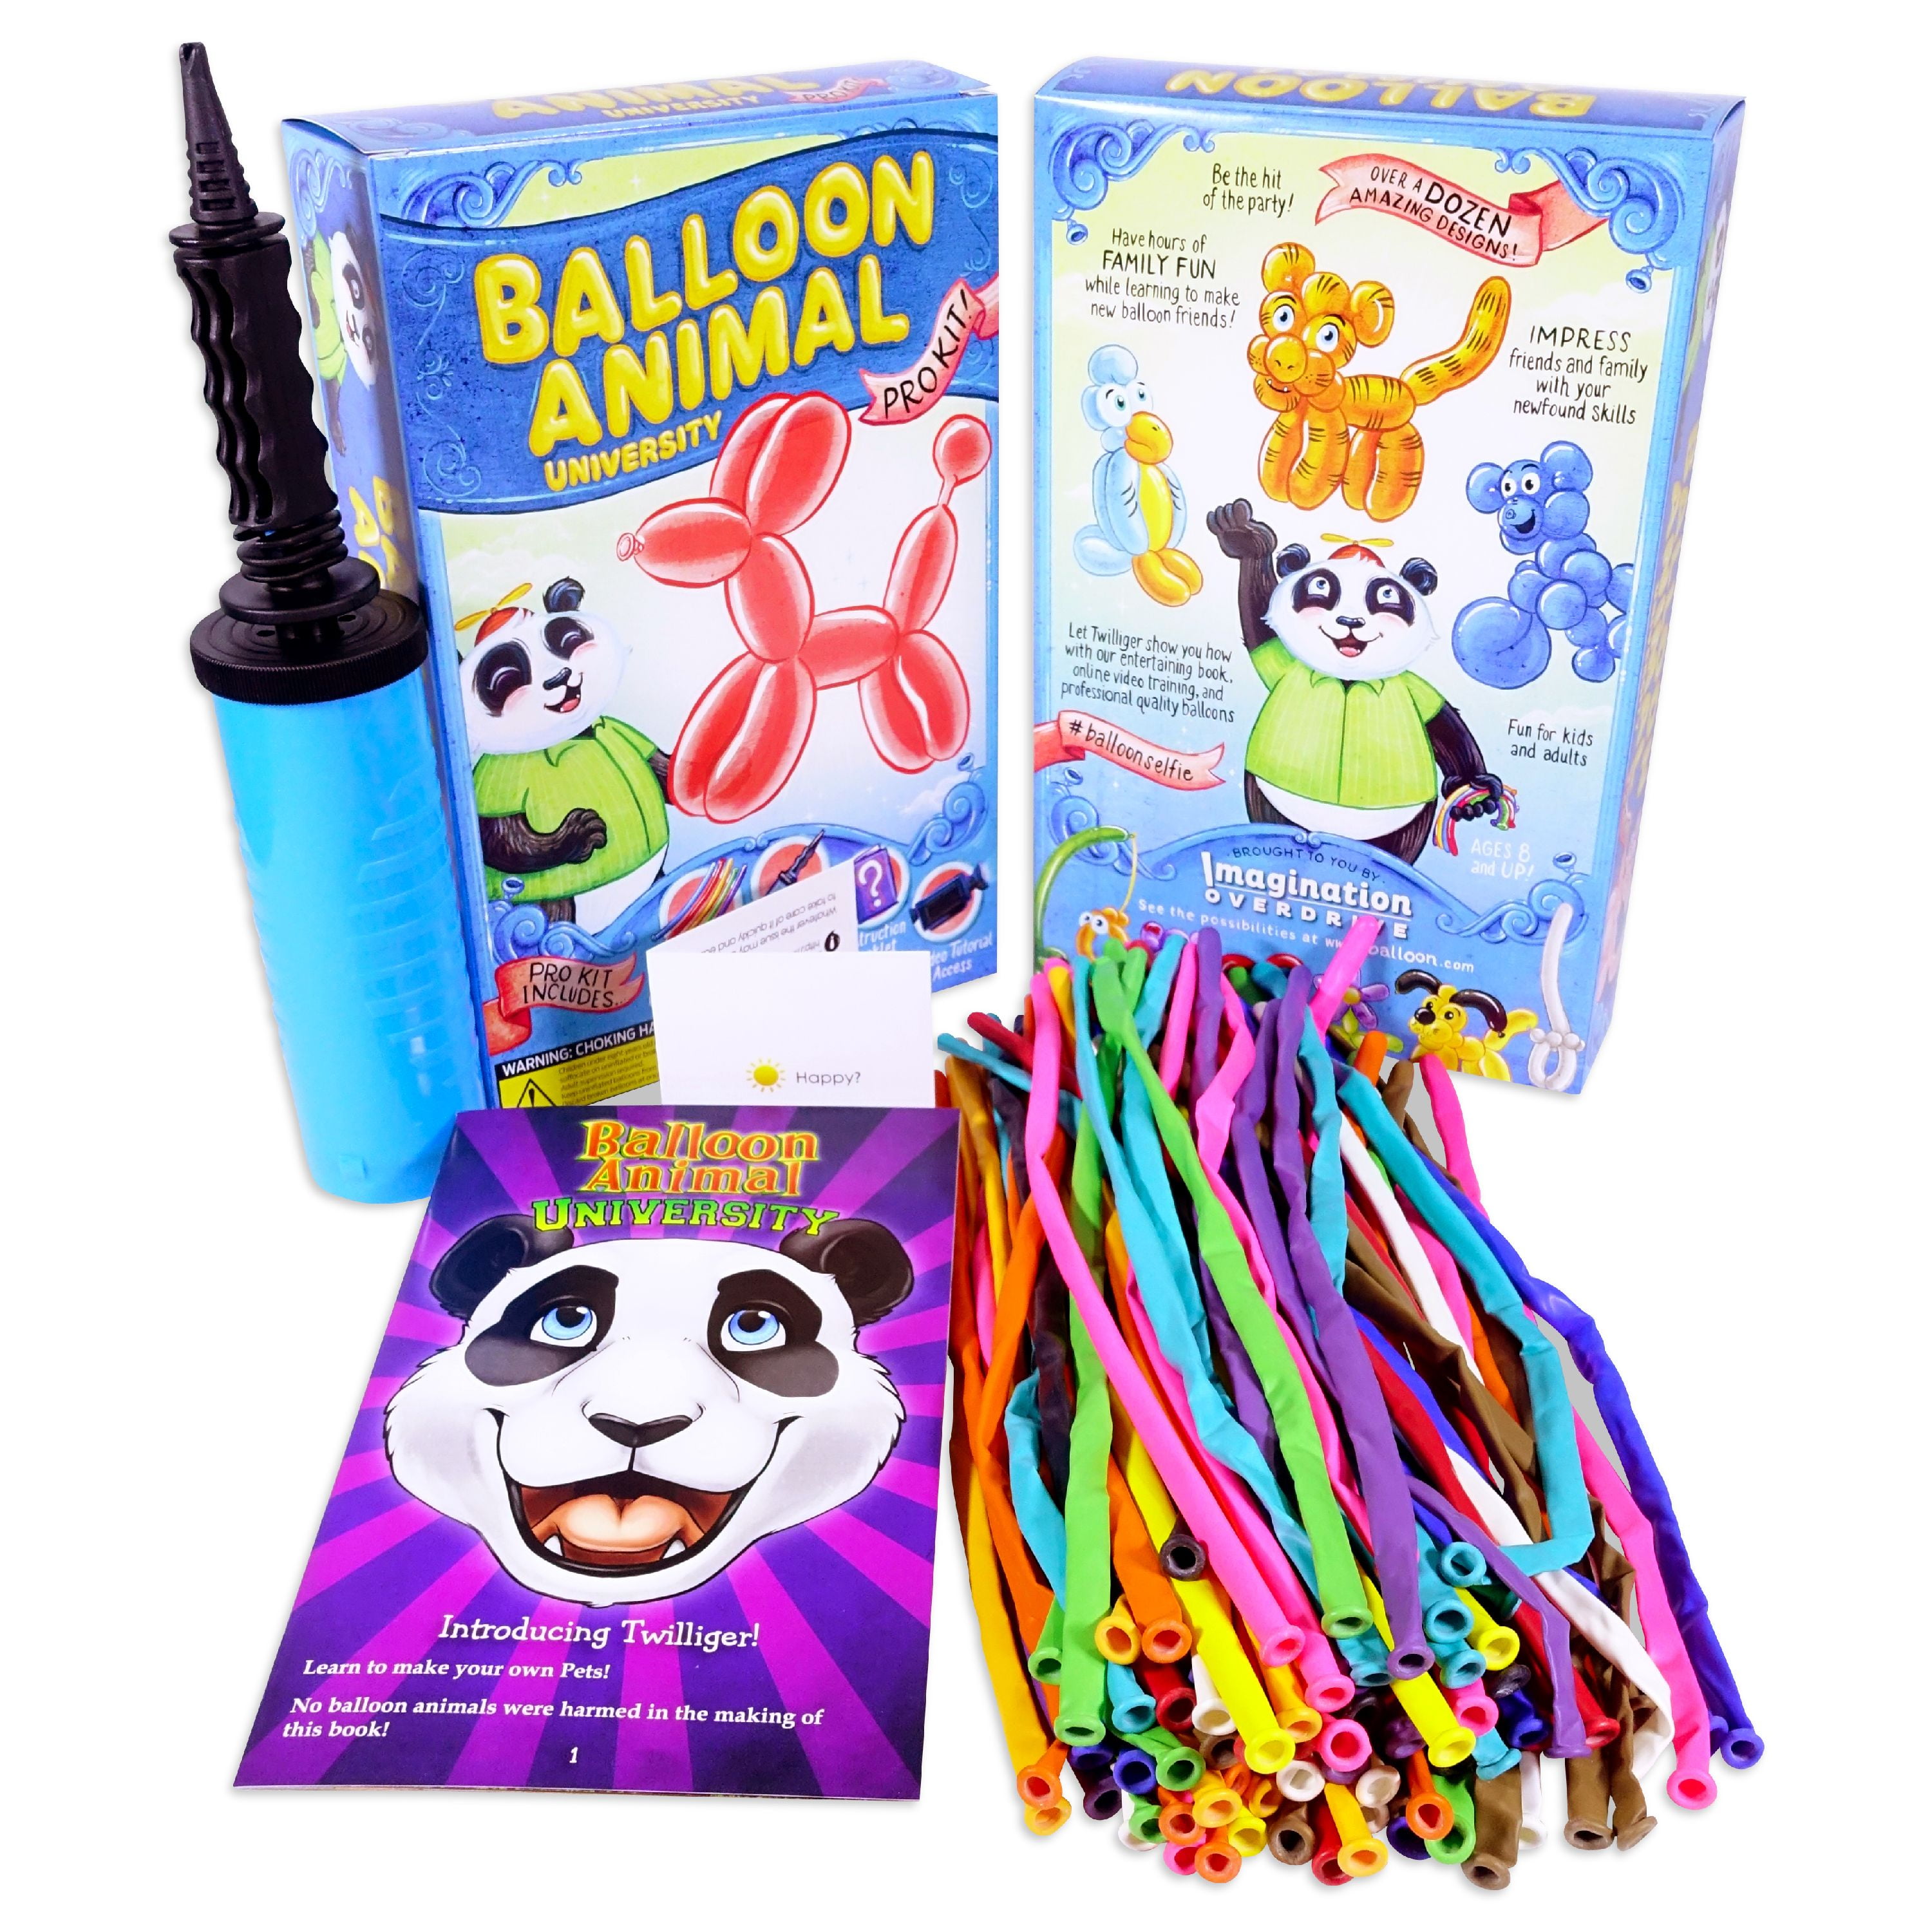 Balloon Animal University PRO 100 Kit. You Can Learn to Make Balloon Animals  